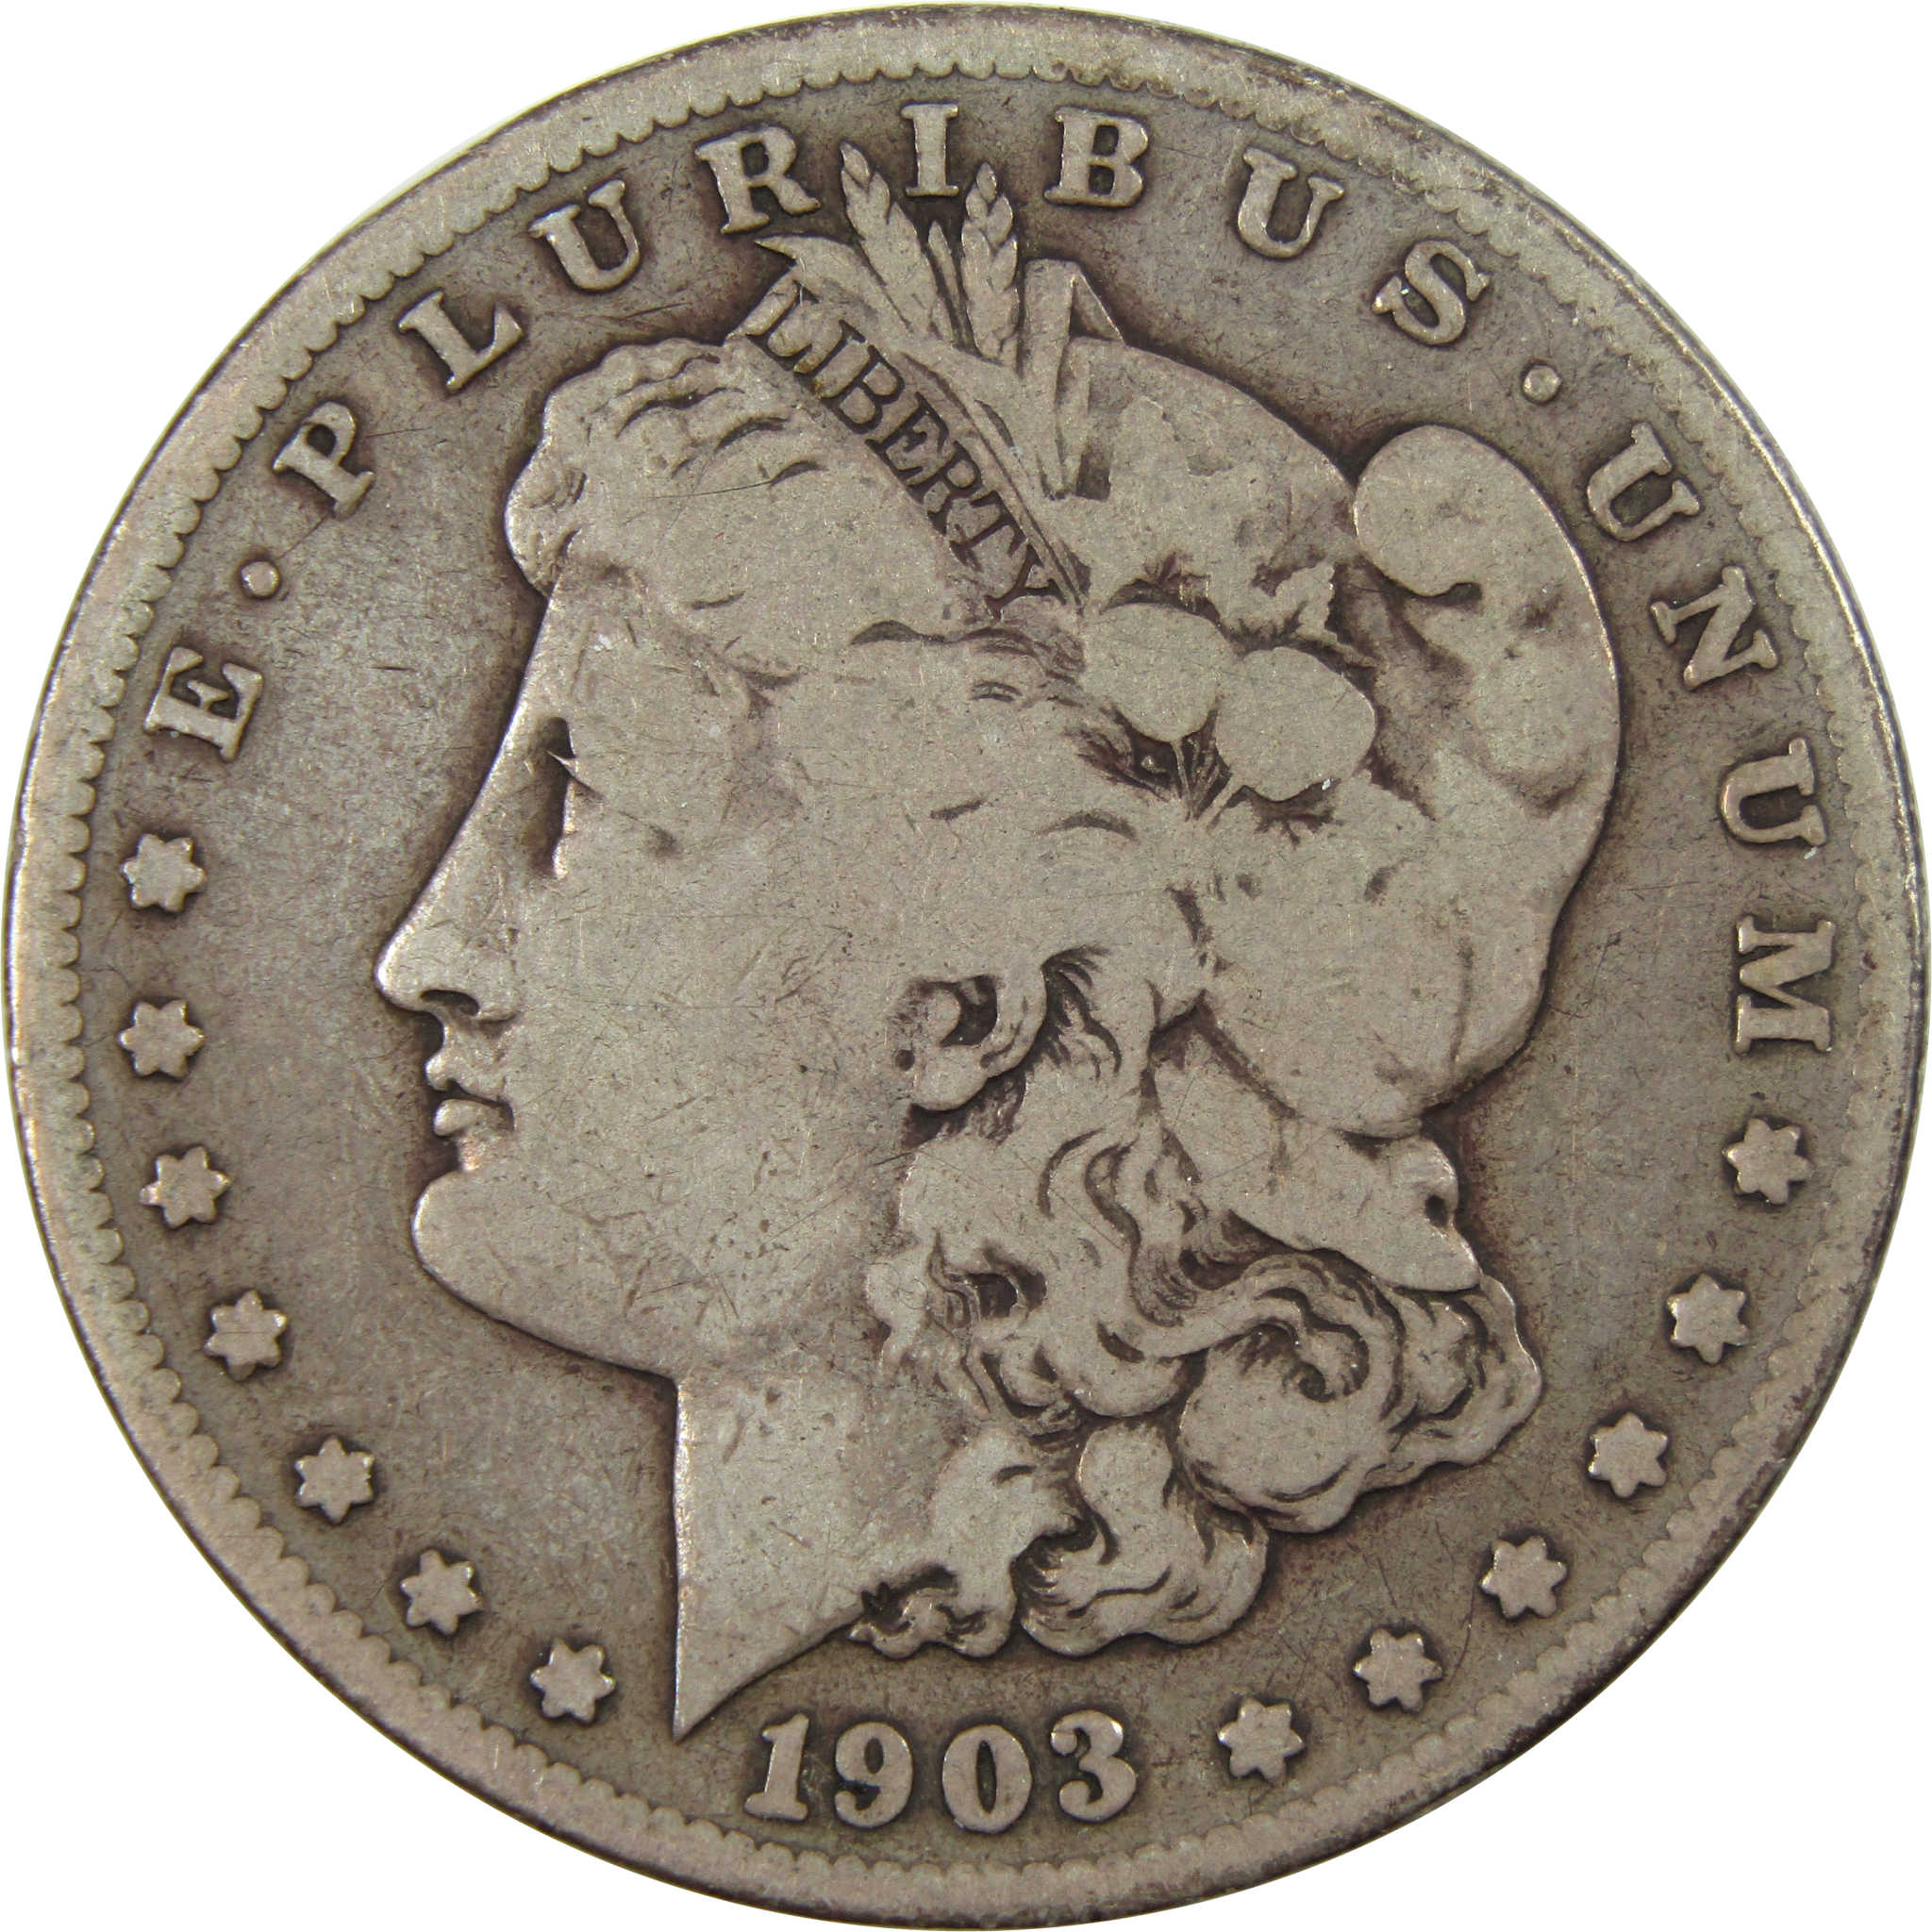 1903 S Morgan Dollar VG Very Good 90% Silver $1 Coin SKU:I4967 - Morgan coin - Morgan silver dollar - Morgan silver dollar for sale - Profile Coins &amp; Collectibles